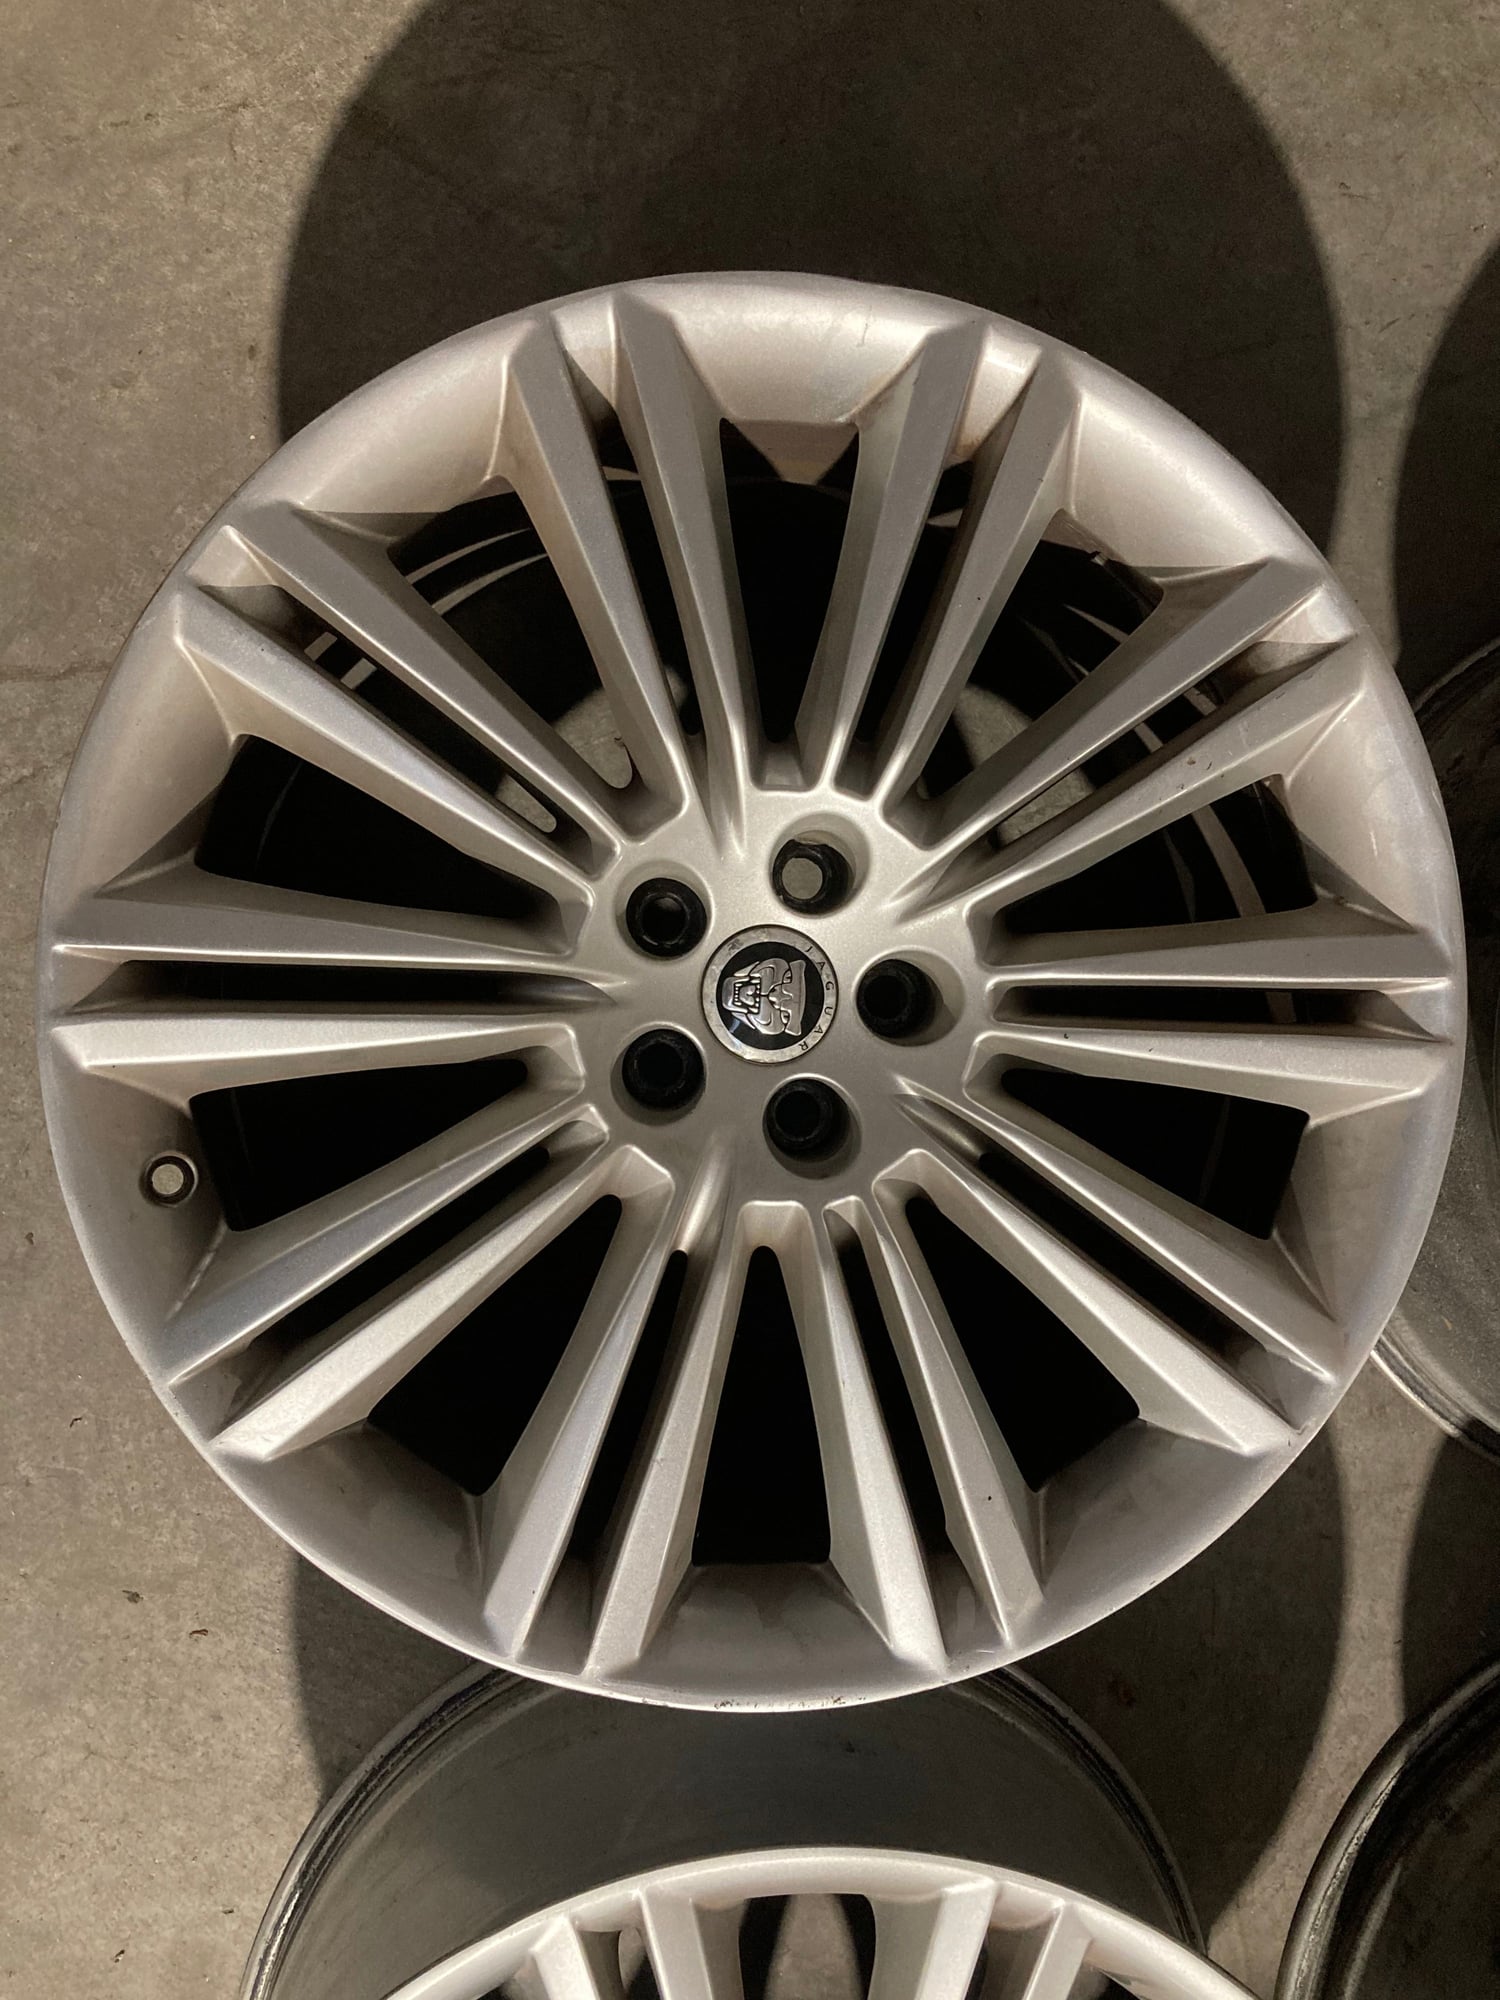 Wheels and Tires/Axles - 20” Jaguar OEM Kasuga Wheels - Used - 0  All Models - Austin, TX 78719, United States